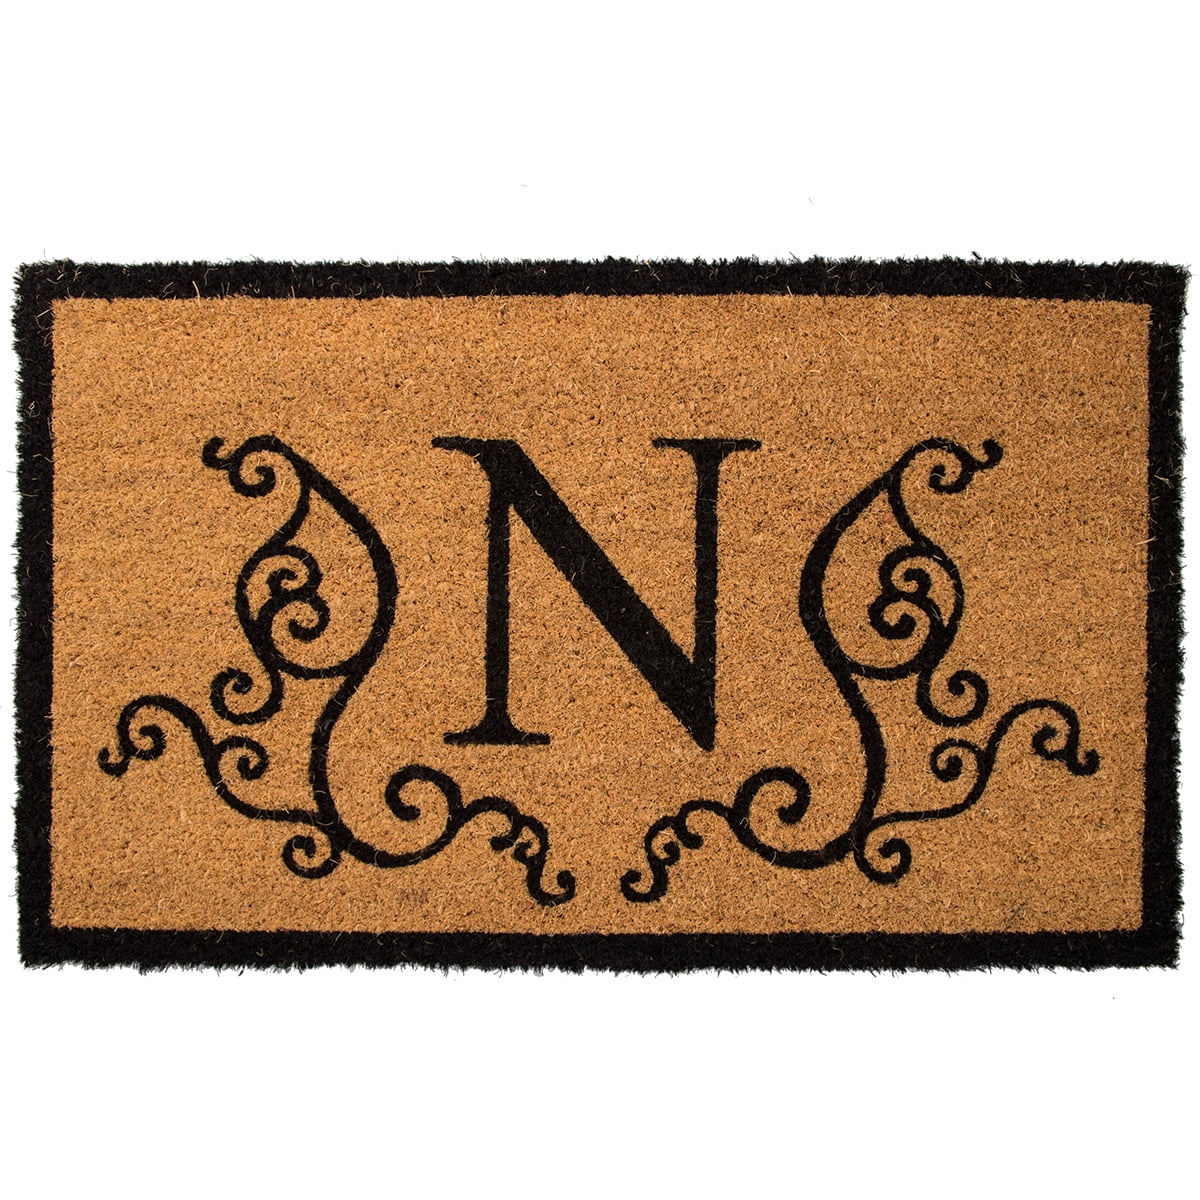 103331846 Regency Monogram Doormat 18 x 46 x 1.5 Black/Natural Letter I 